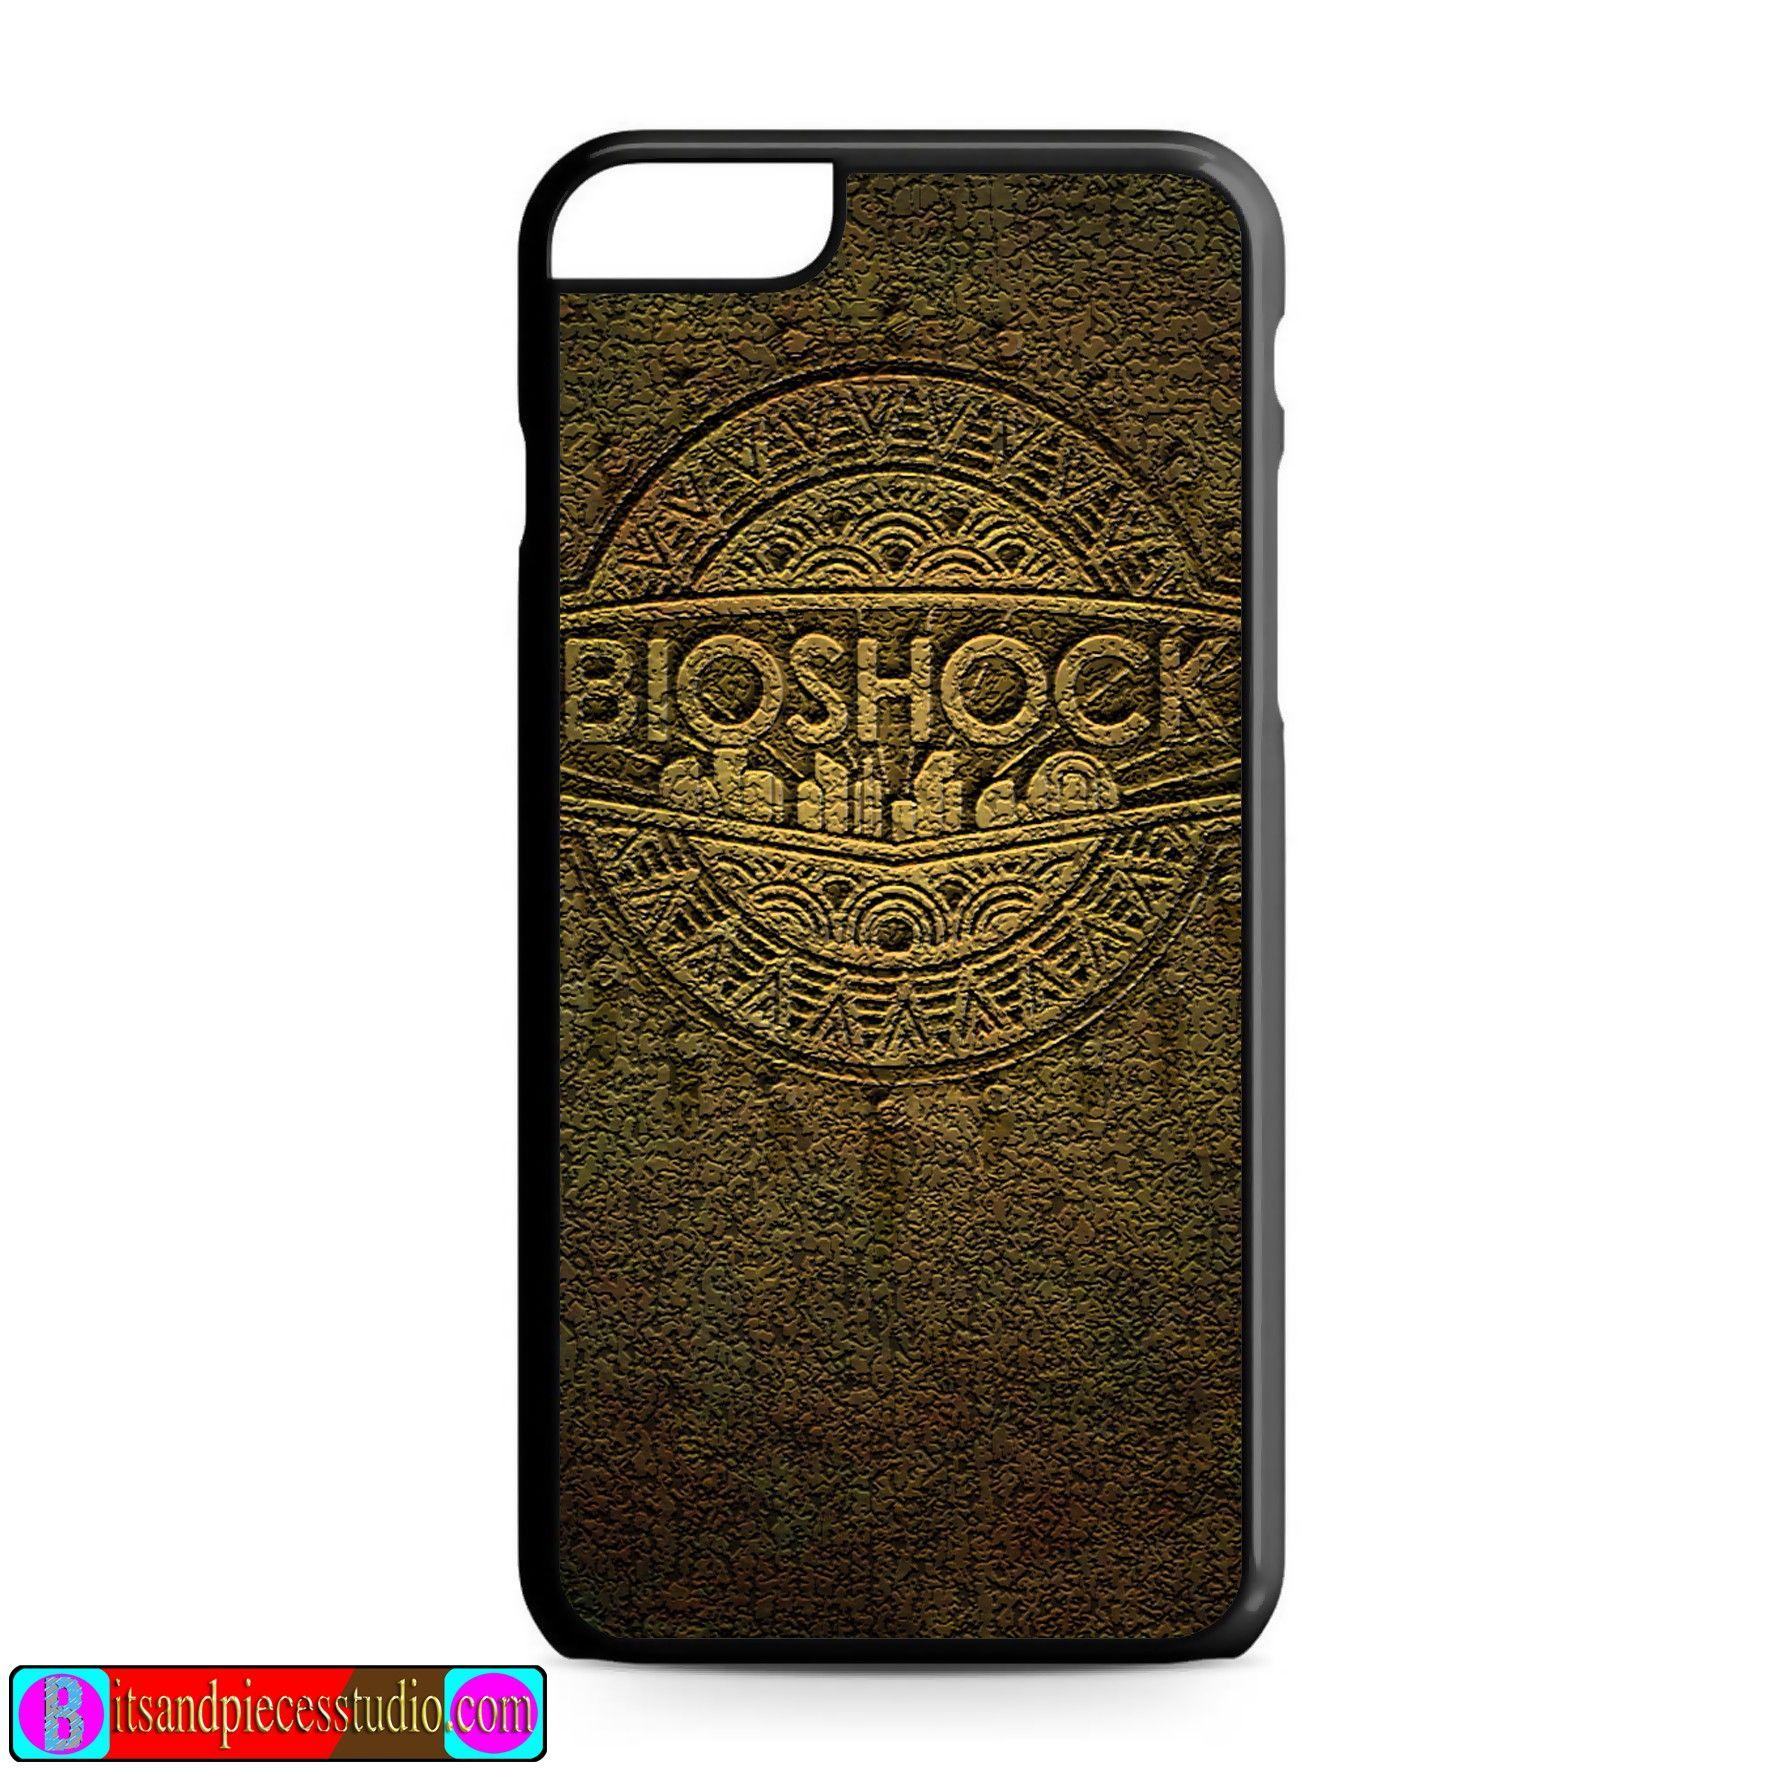 BioShock Logo - Bioshock Logo 1 - iphone 4 4s 5 5s 5c 6 6s 7 7s 8 9 x se plus phone case  cover cases USA